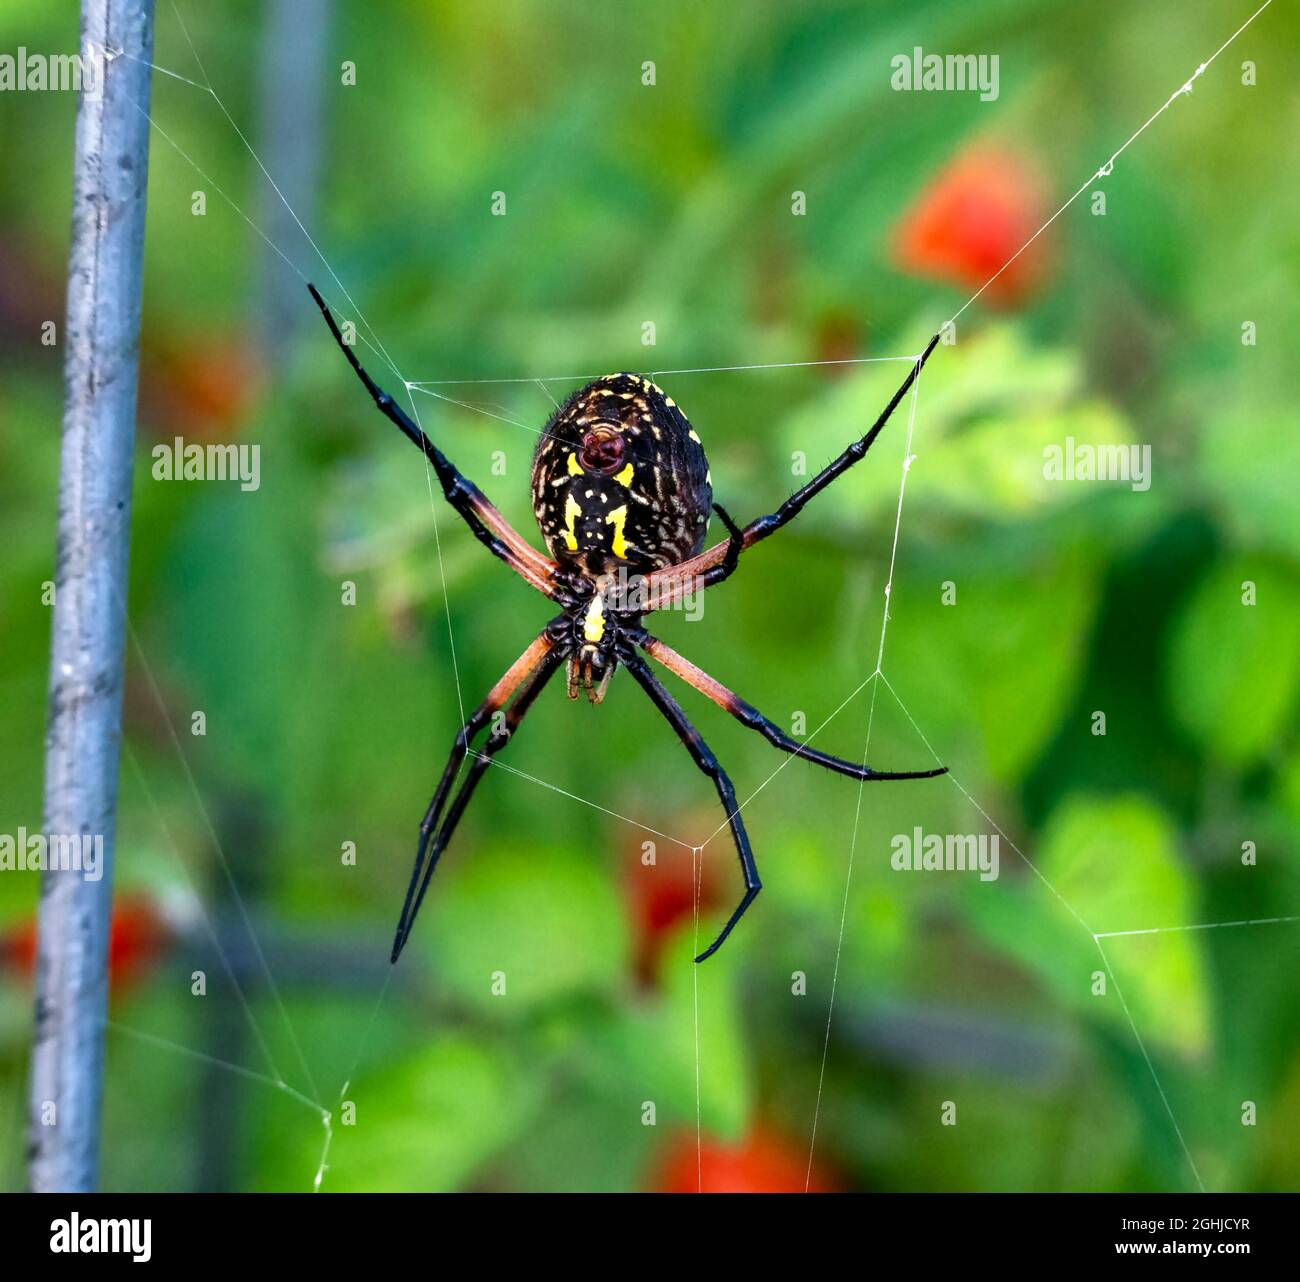 Yellow garden spider, Argiope aurantia, spinning web on tomato plant in garden. Stock Photo